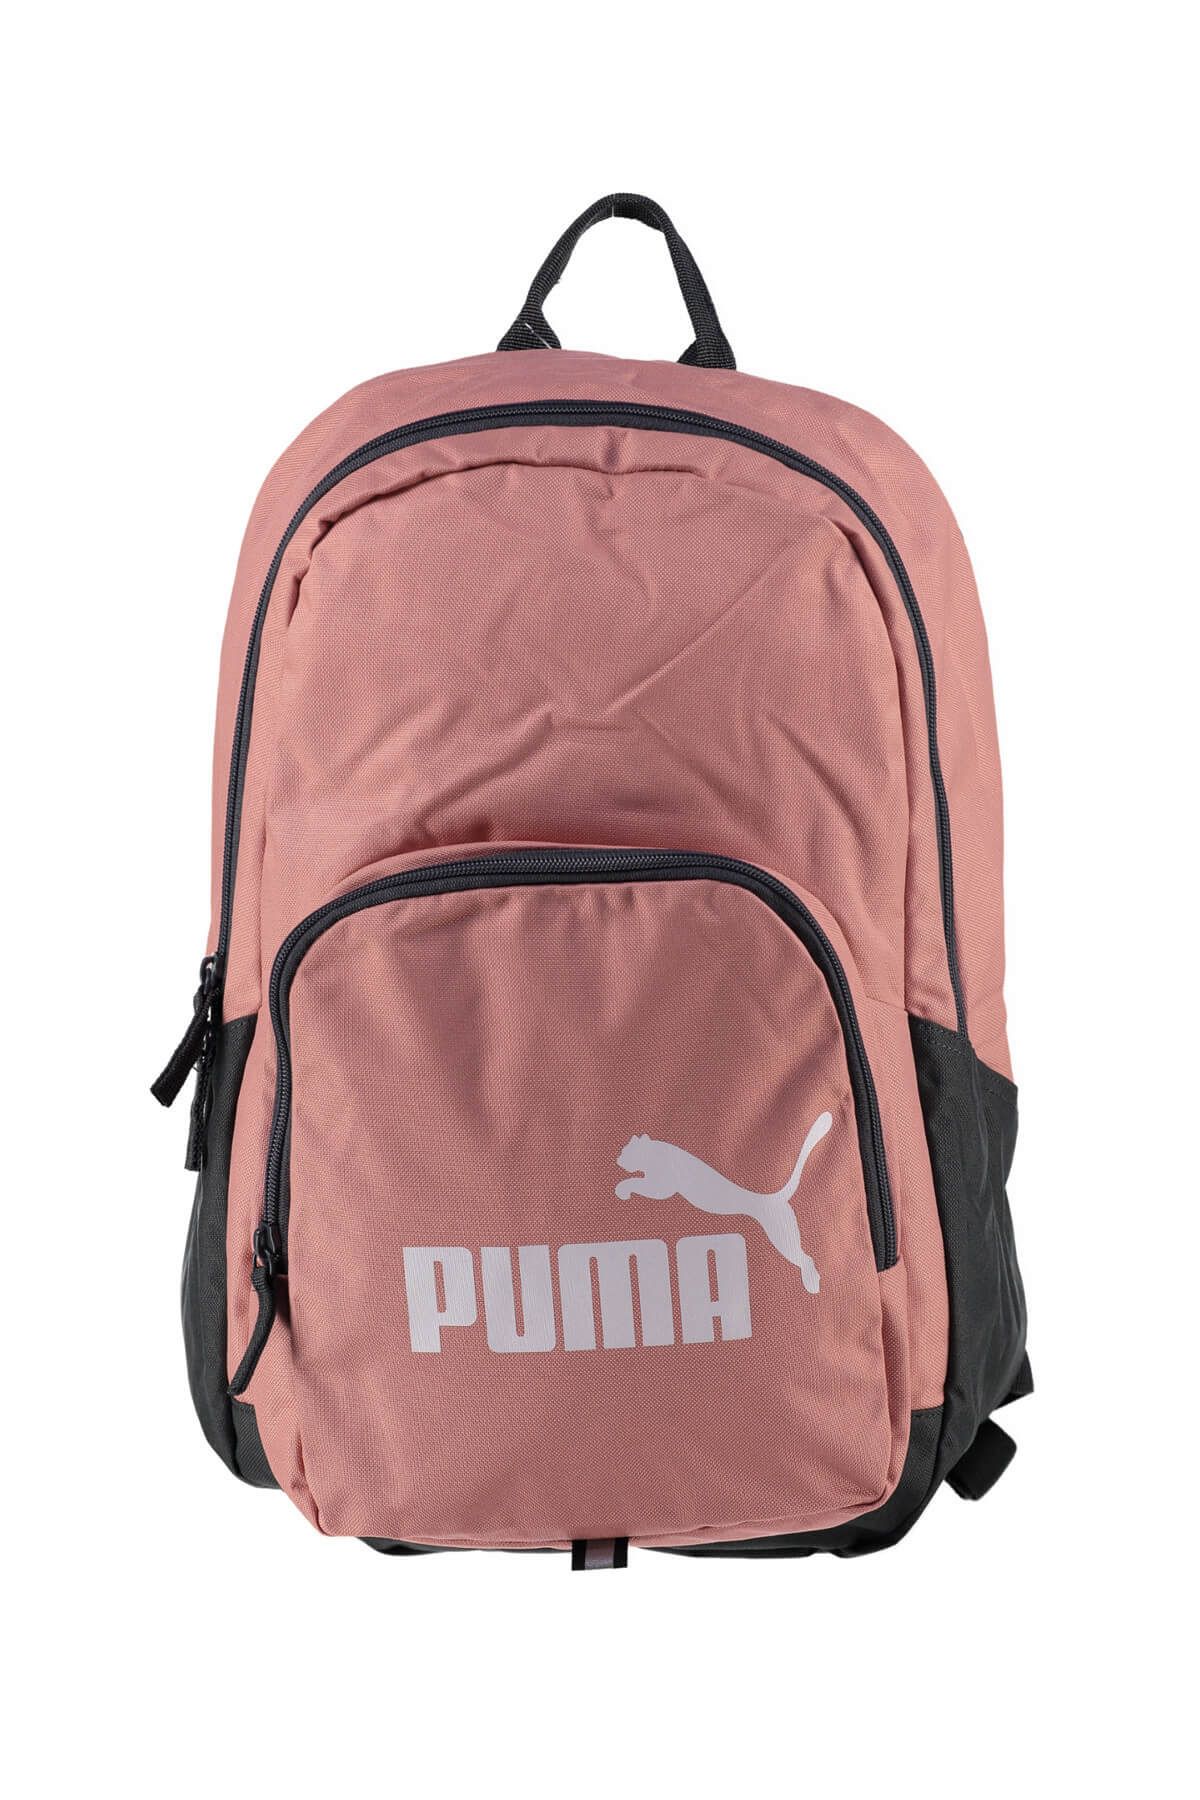 Puma Unisex Sırt Çantası - 7358928 Phase Backpack - 7358928